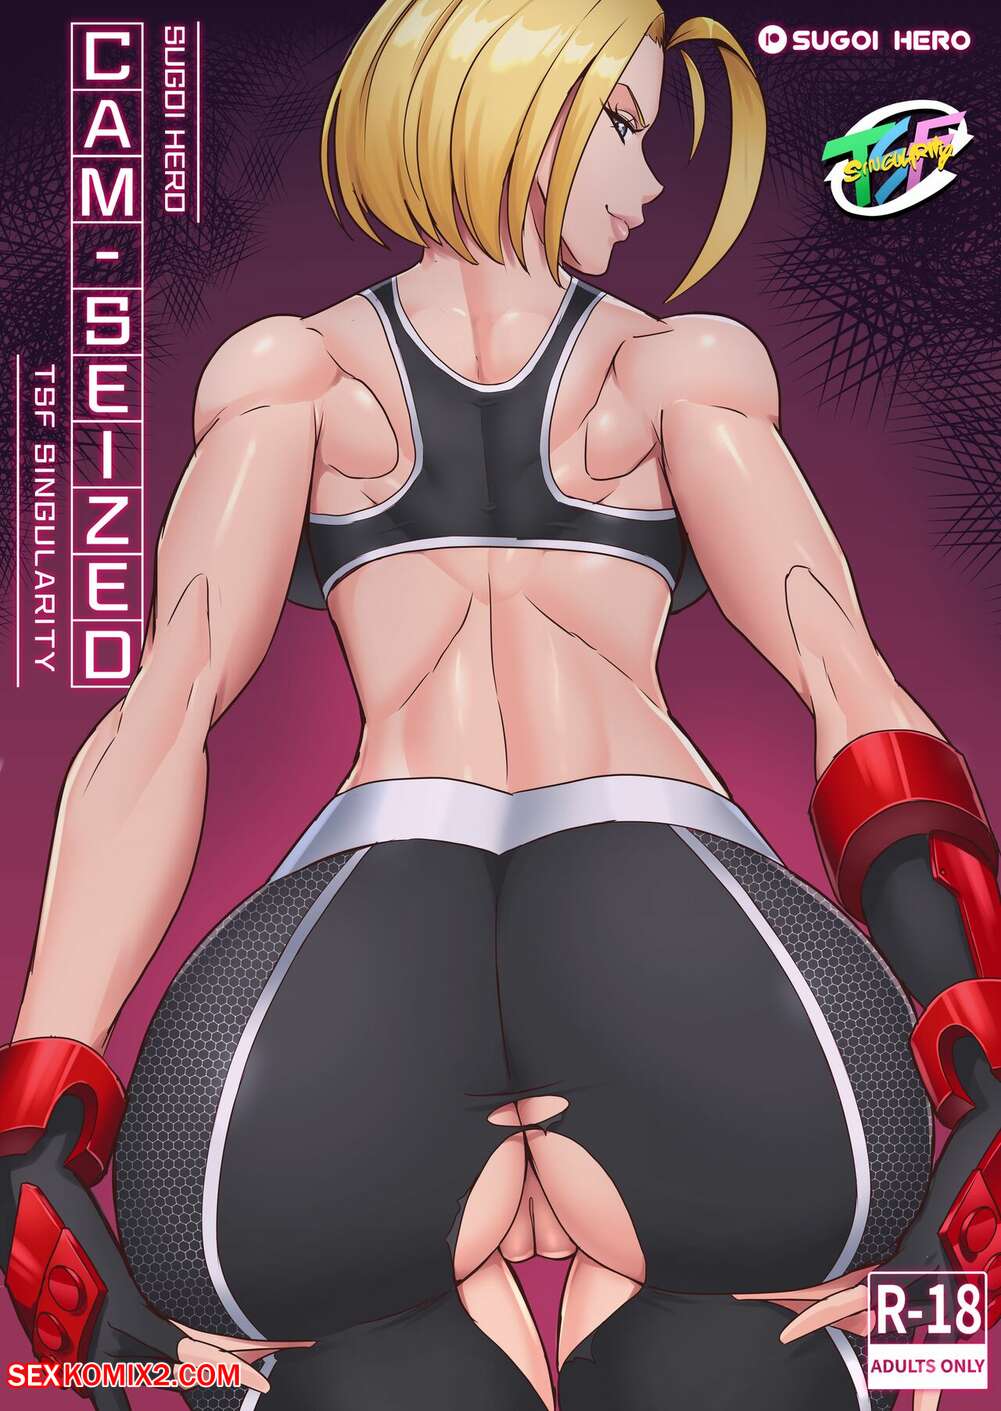 Xxx Hero Hd Com - âœ…ï¸ Porn comic CamSeized. Street Fighter 6. Sugoi Hero. Sex comic hot sexy  babes | Porn comics in English for adults only | sexkomix2.com